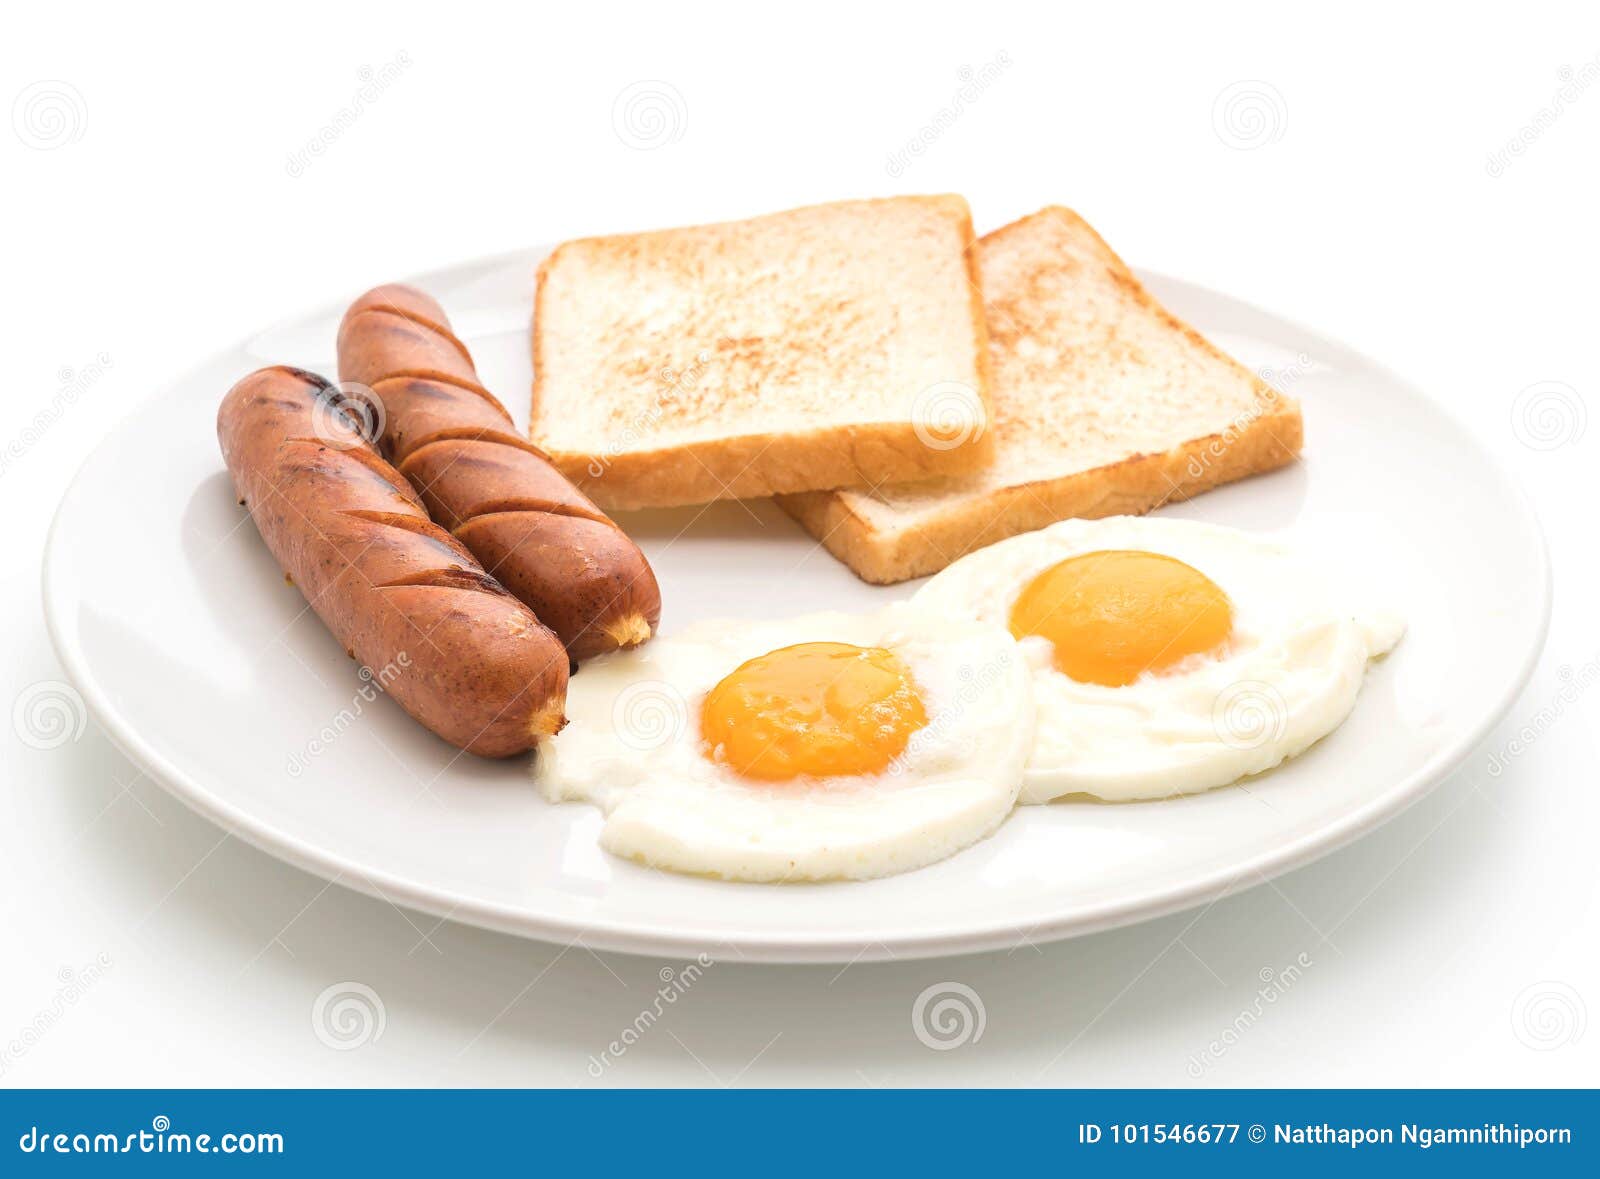 Два яйца и колбаса. Омлет с сосисками. Яичница с сосисками. Яйцо в сосиске к завтраку. Сосиска с яйцом.